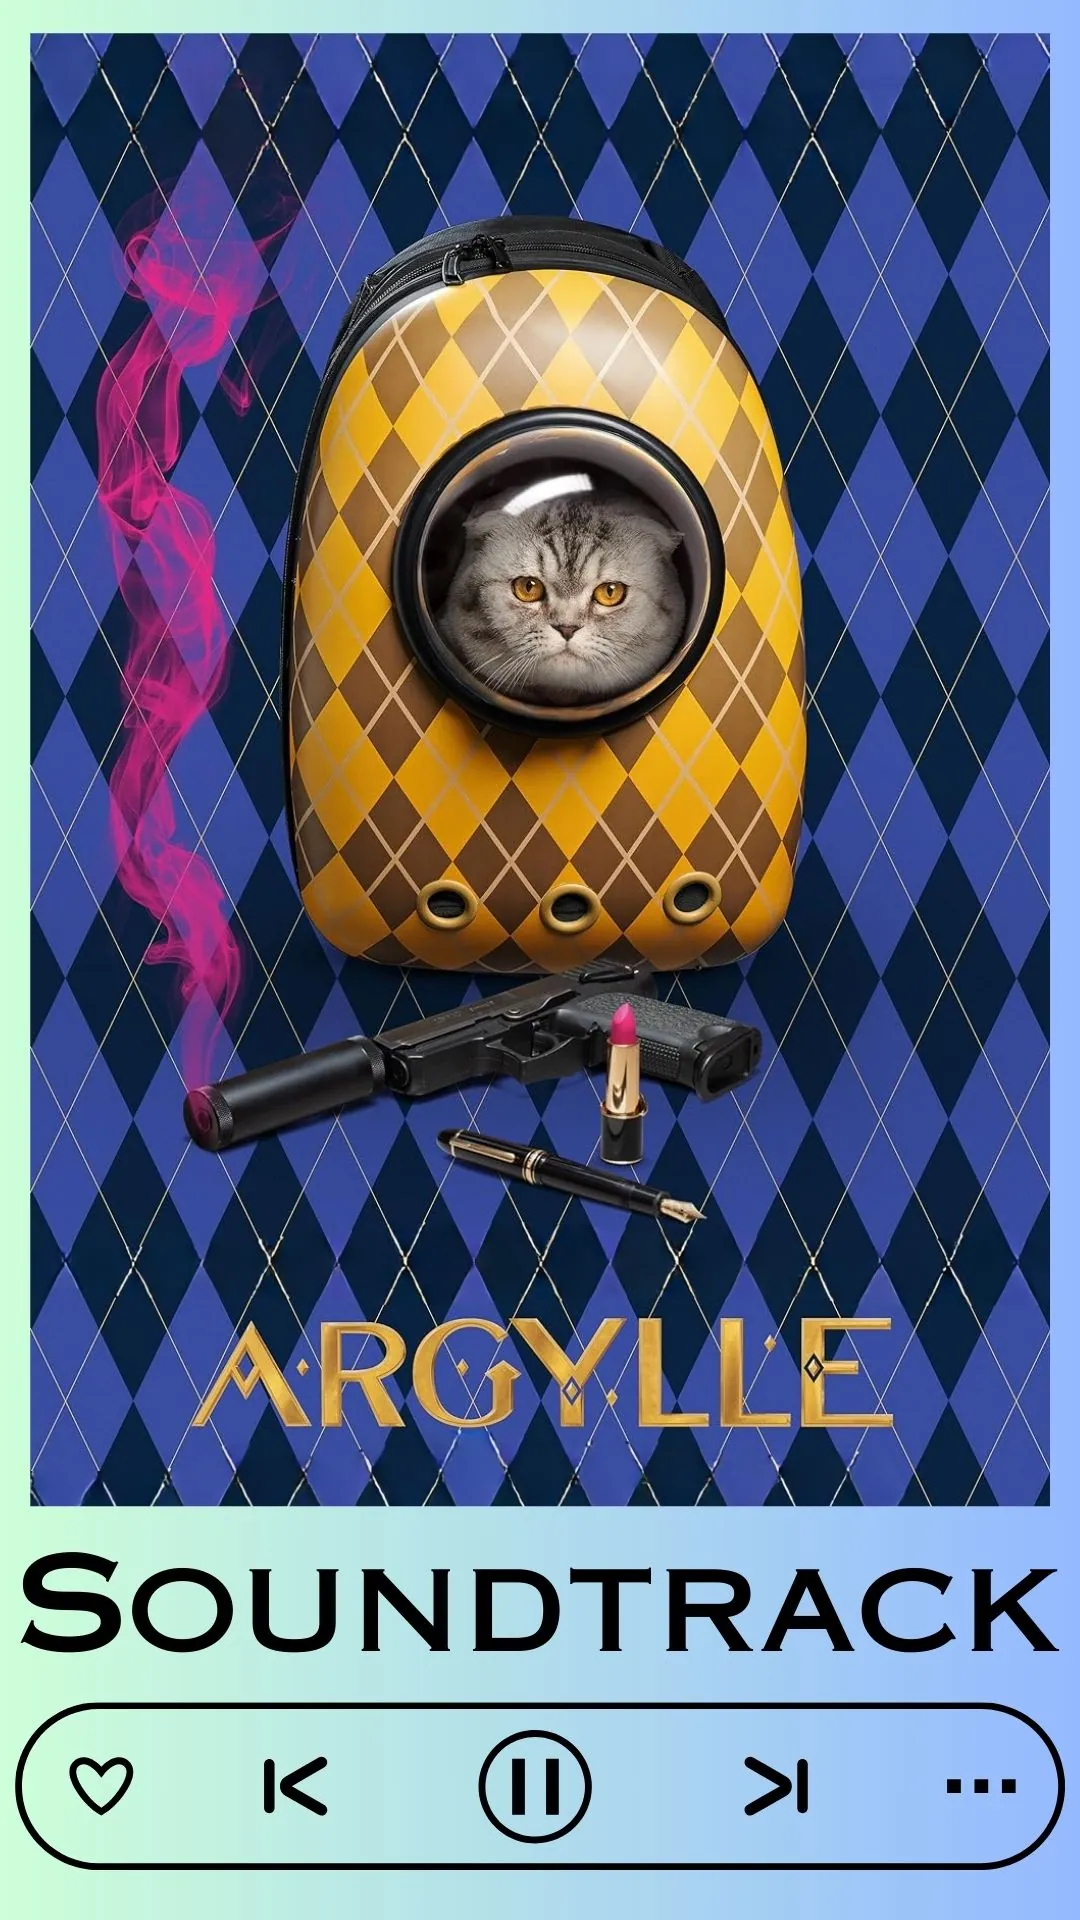 Argylle Soundtrack